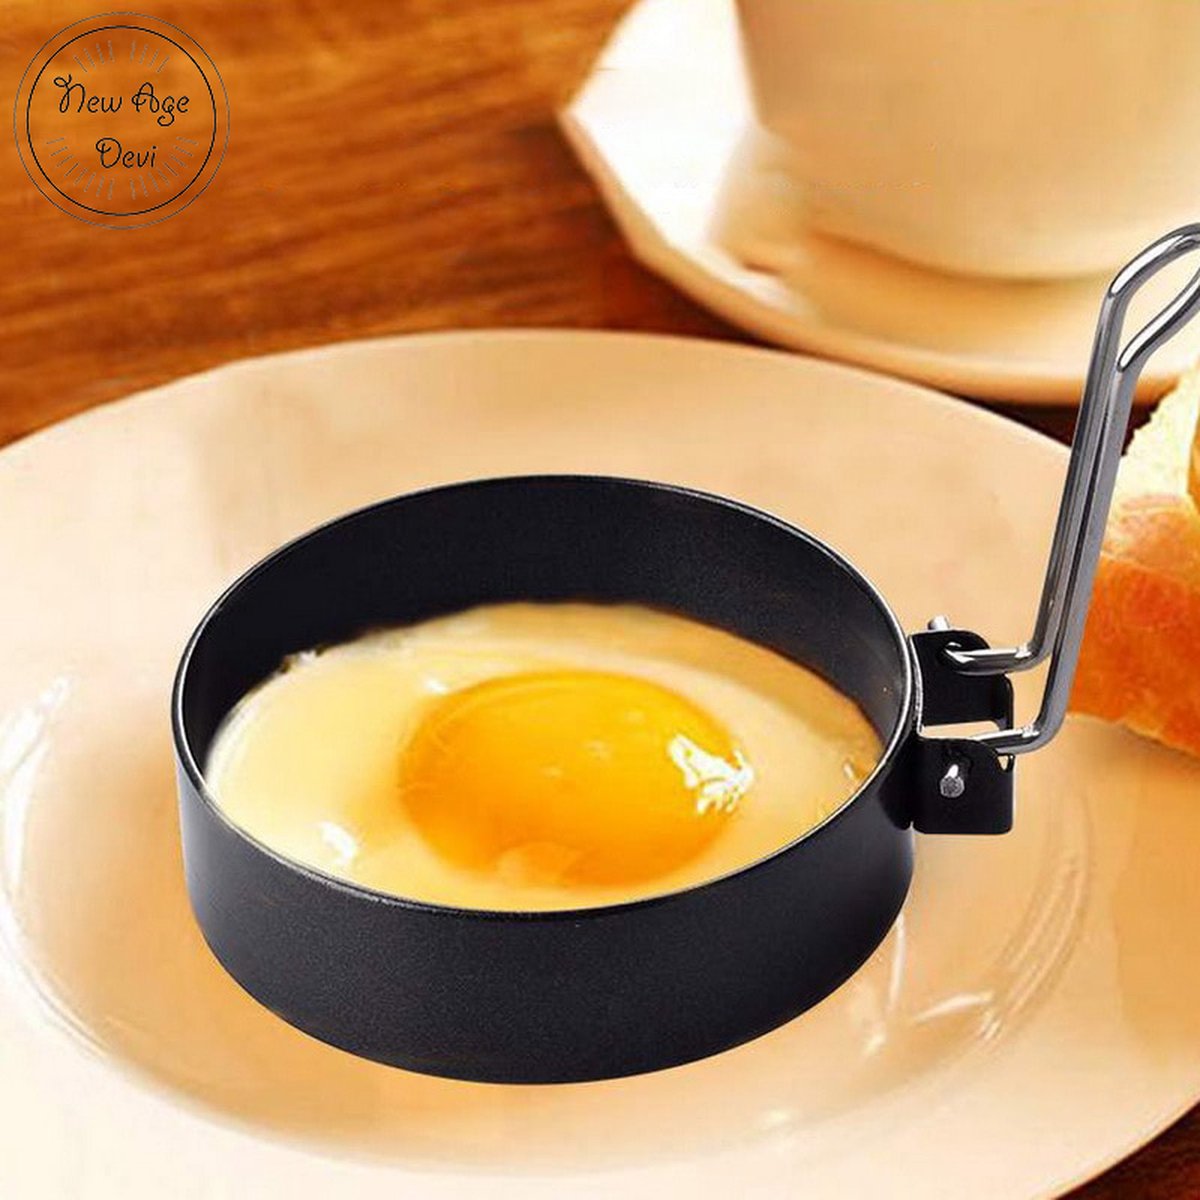 Ei vorm - Eier bakvorm - Eieren bakken - RVS - Perfect rond eitje - Bakvorm - Rond